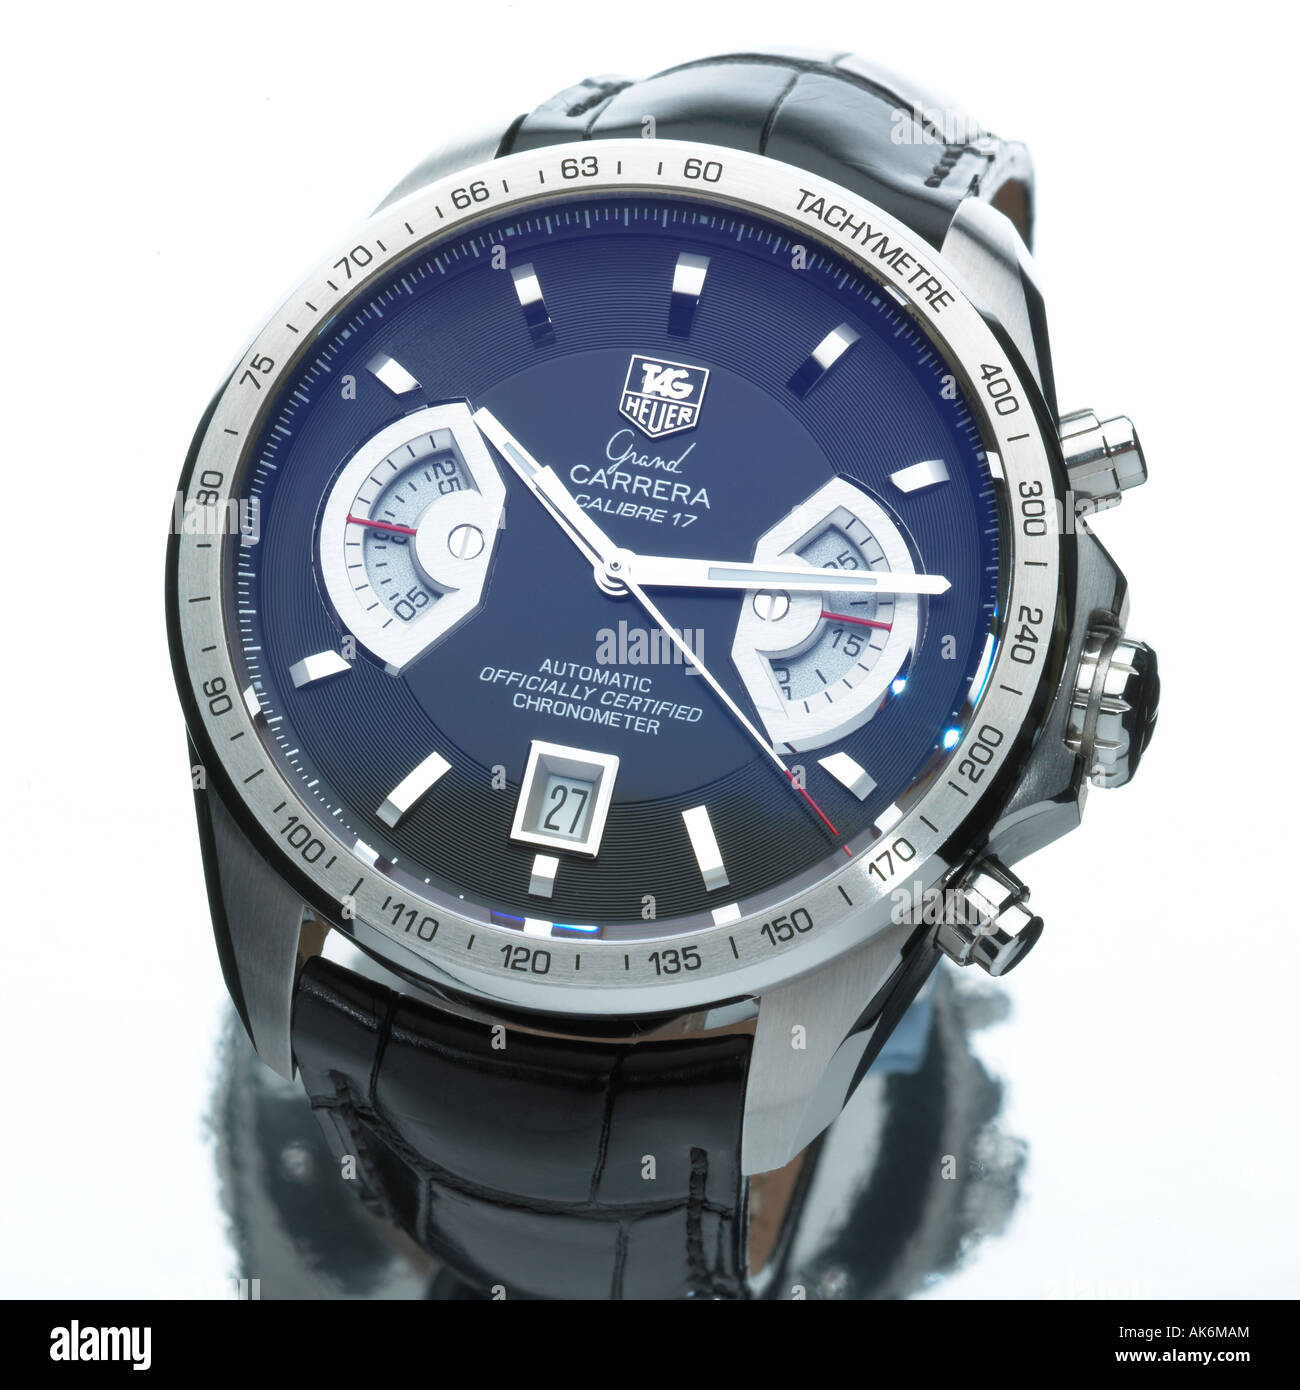 Tag Heuer Grand Carrera automatic Swiss wrist watch Stock Photo - Alamy